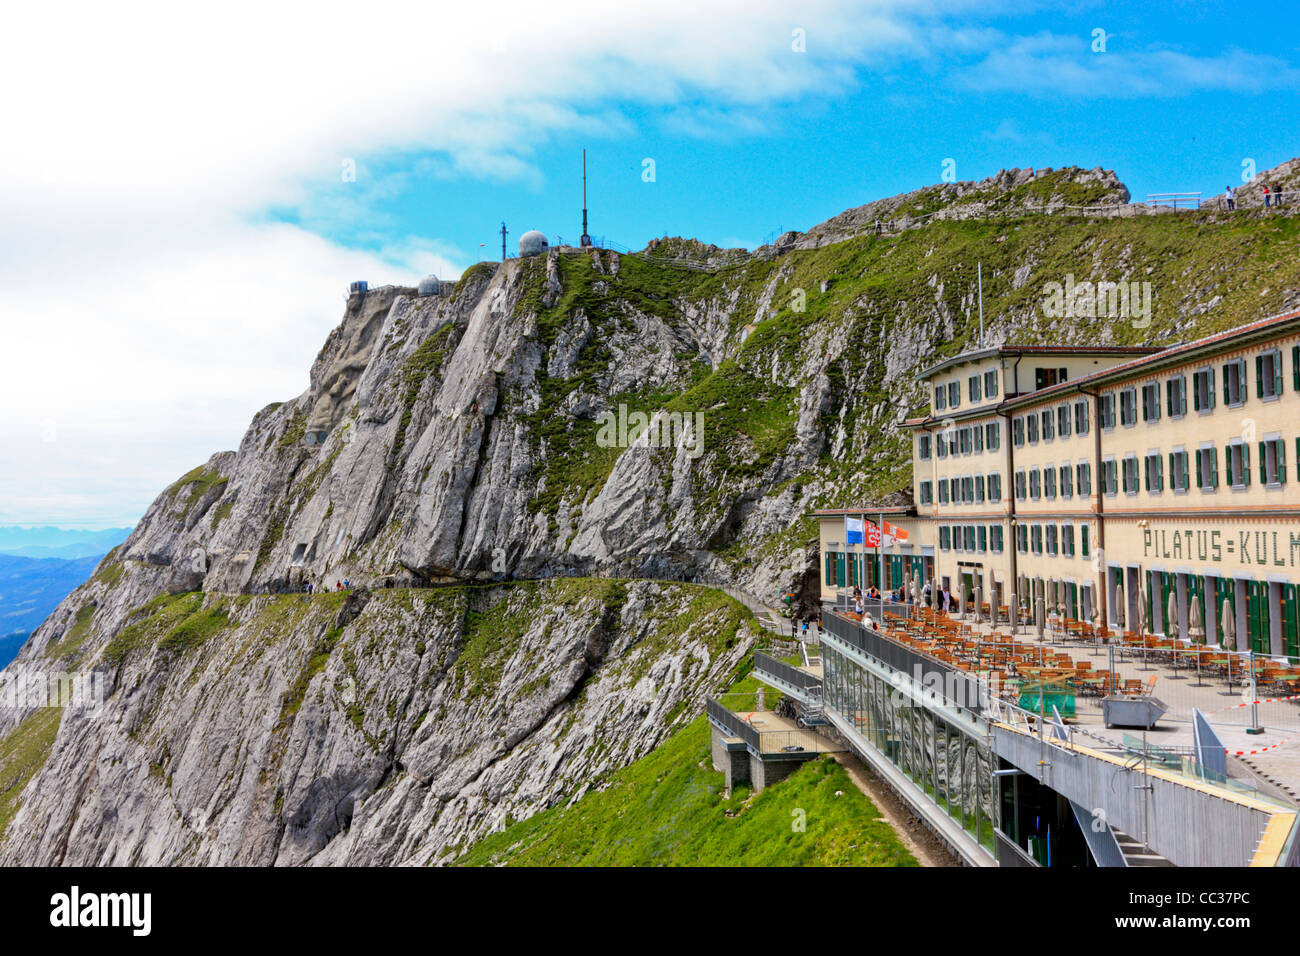 Hotel and Restaurant on Mount Pilatus, Switzerland Stock Photo